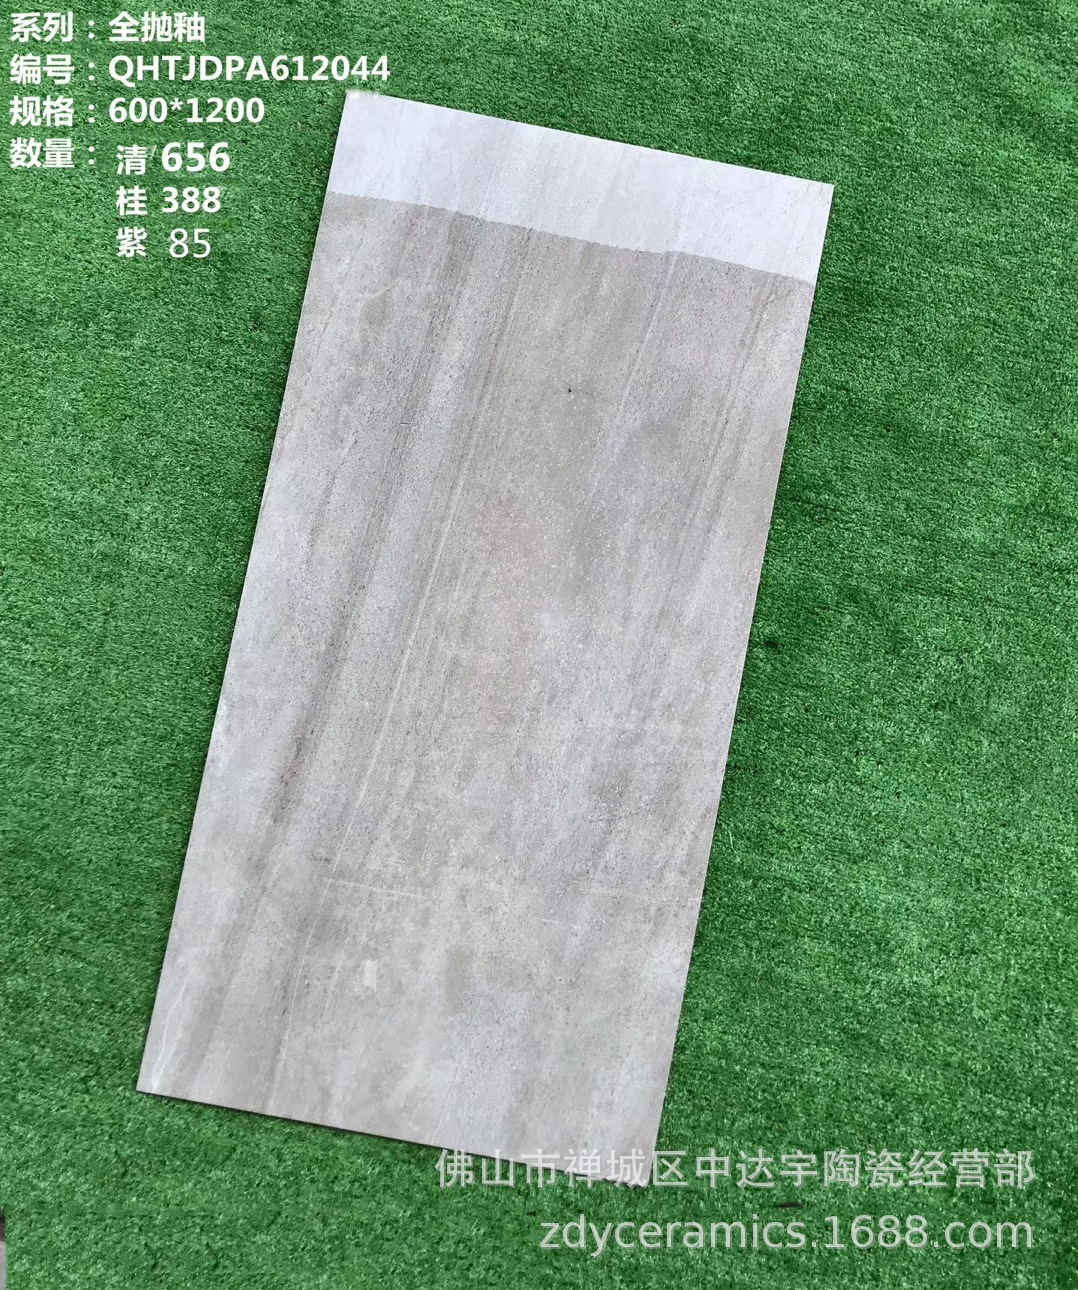 FS全抛釉大理石瓷砖600X1200MM QHTBDPA612033-B客厅卫生间地板砖示例图8